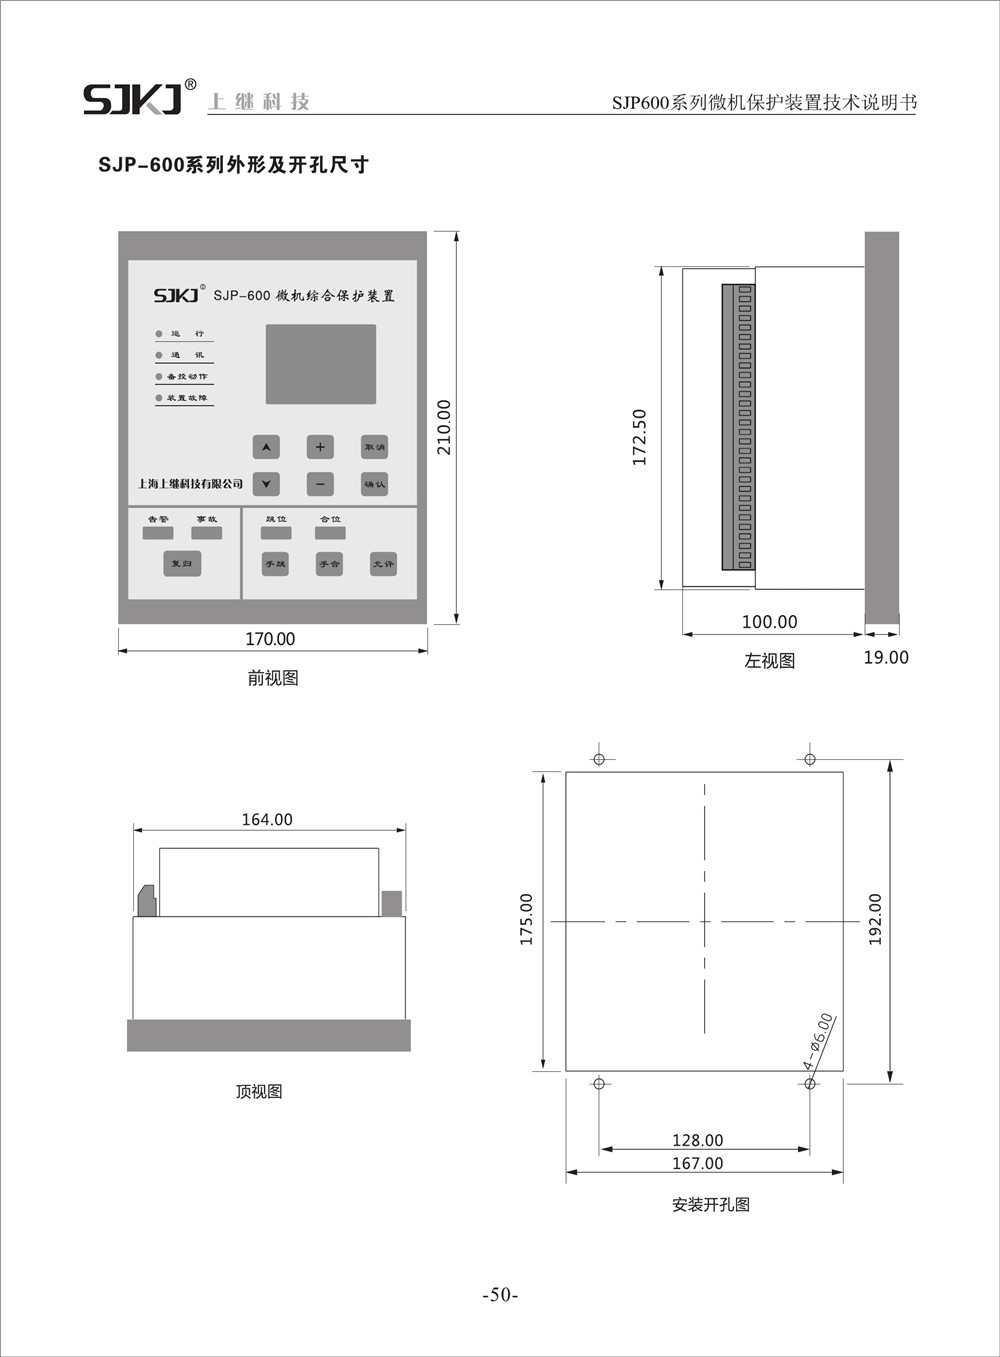 SJP-600A微机综合保护装置产品尺寸图片